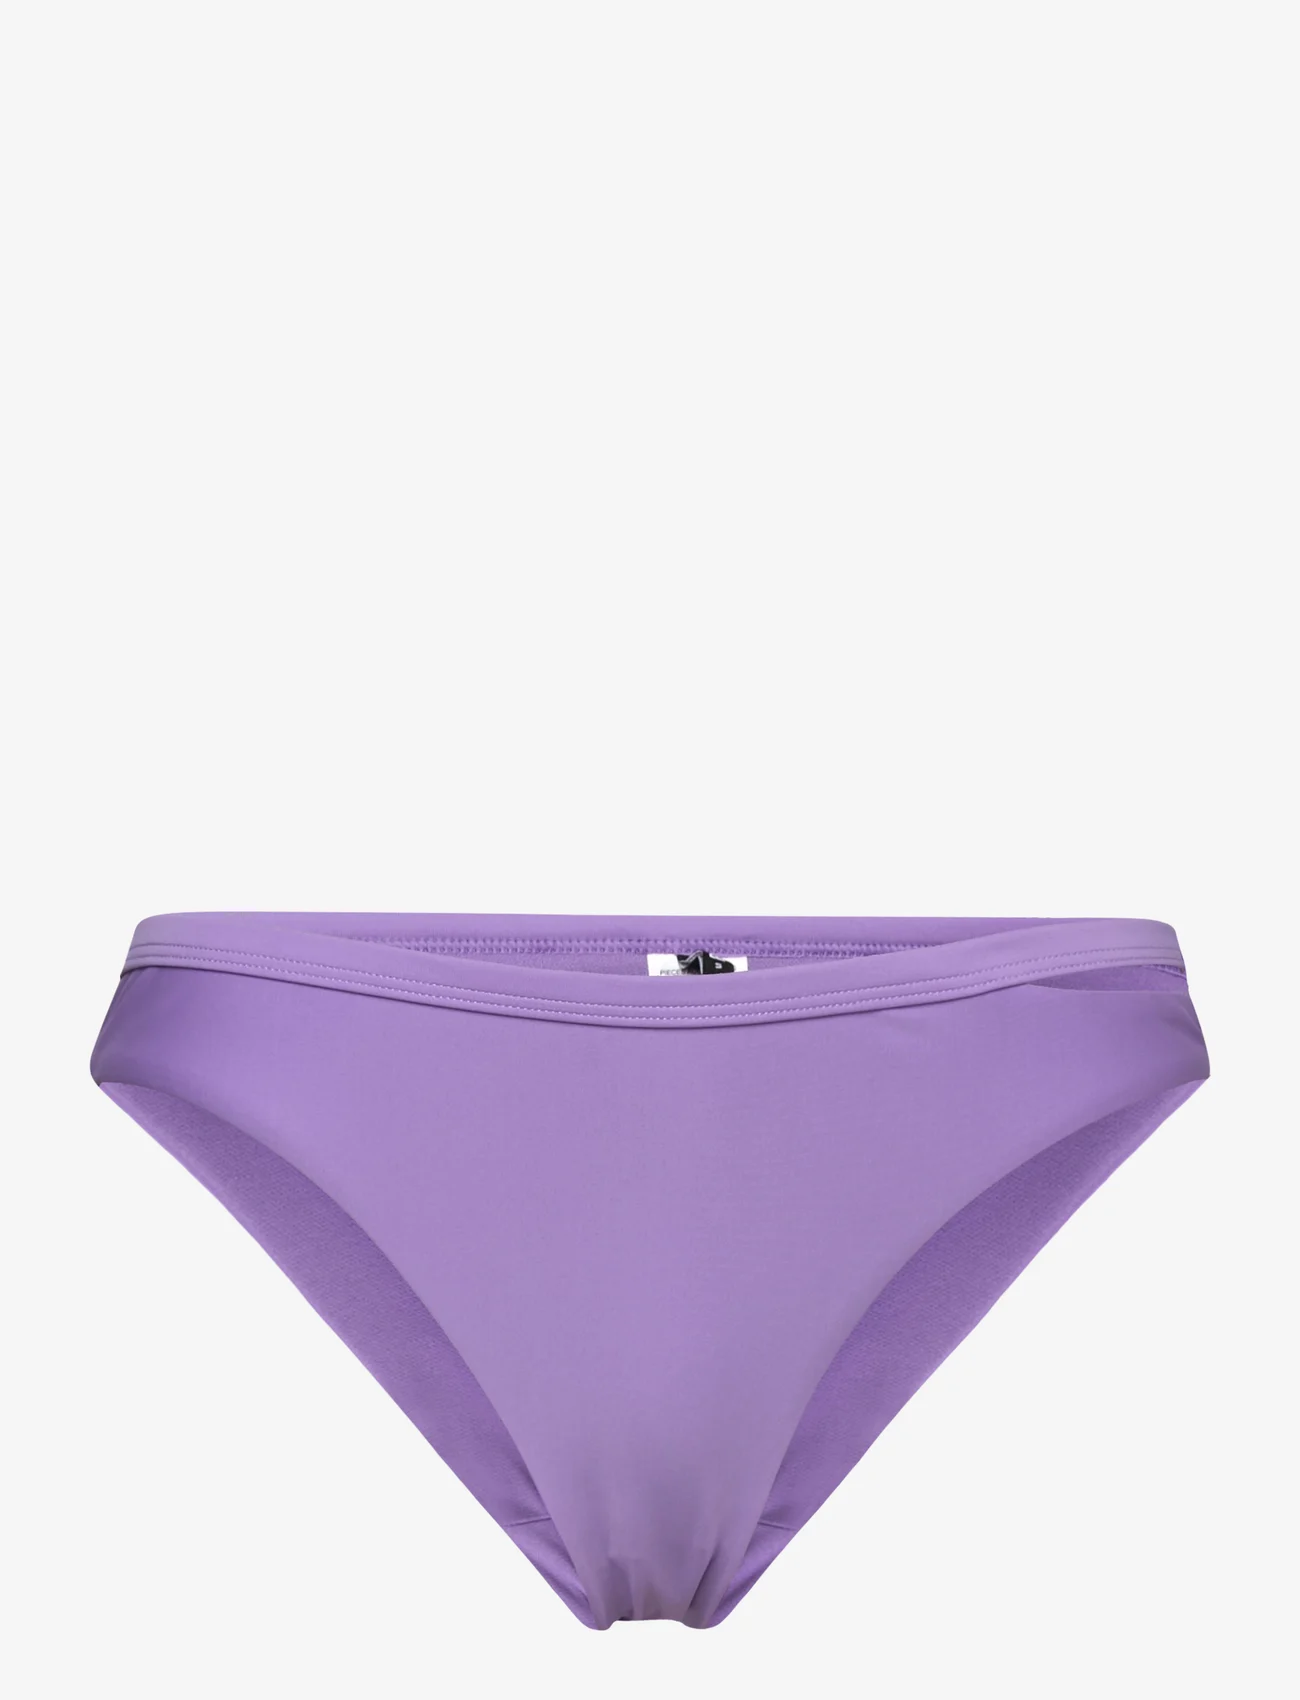 Pieces - PCBARA BIKINI CUT OUT BRAZIL SWW BC - bikinibriefs - paisley purple - 0